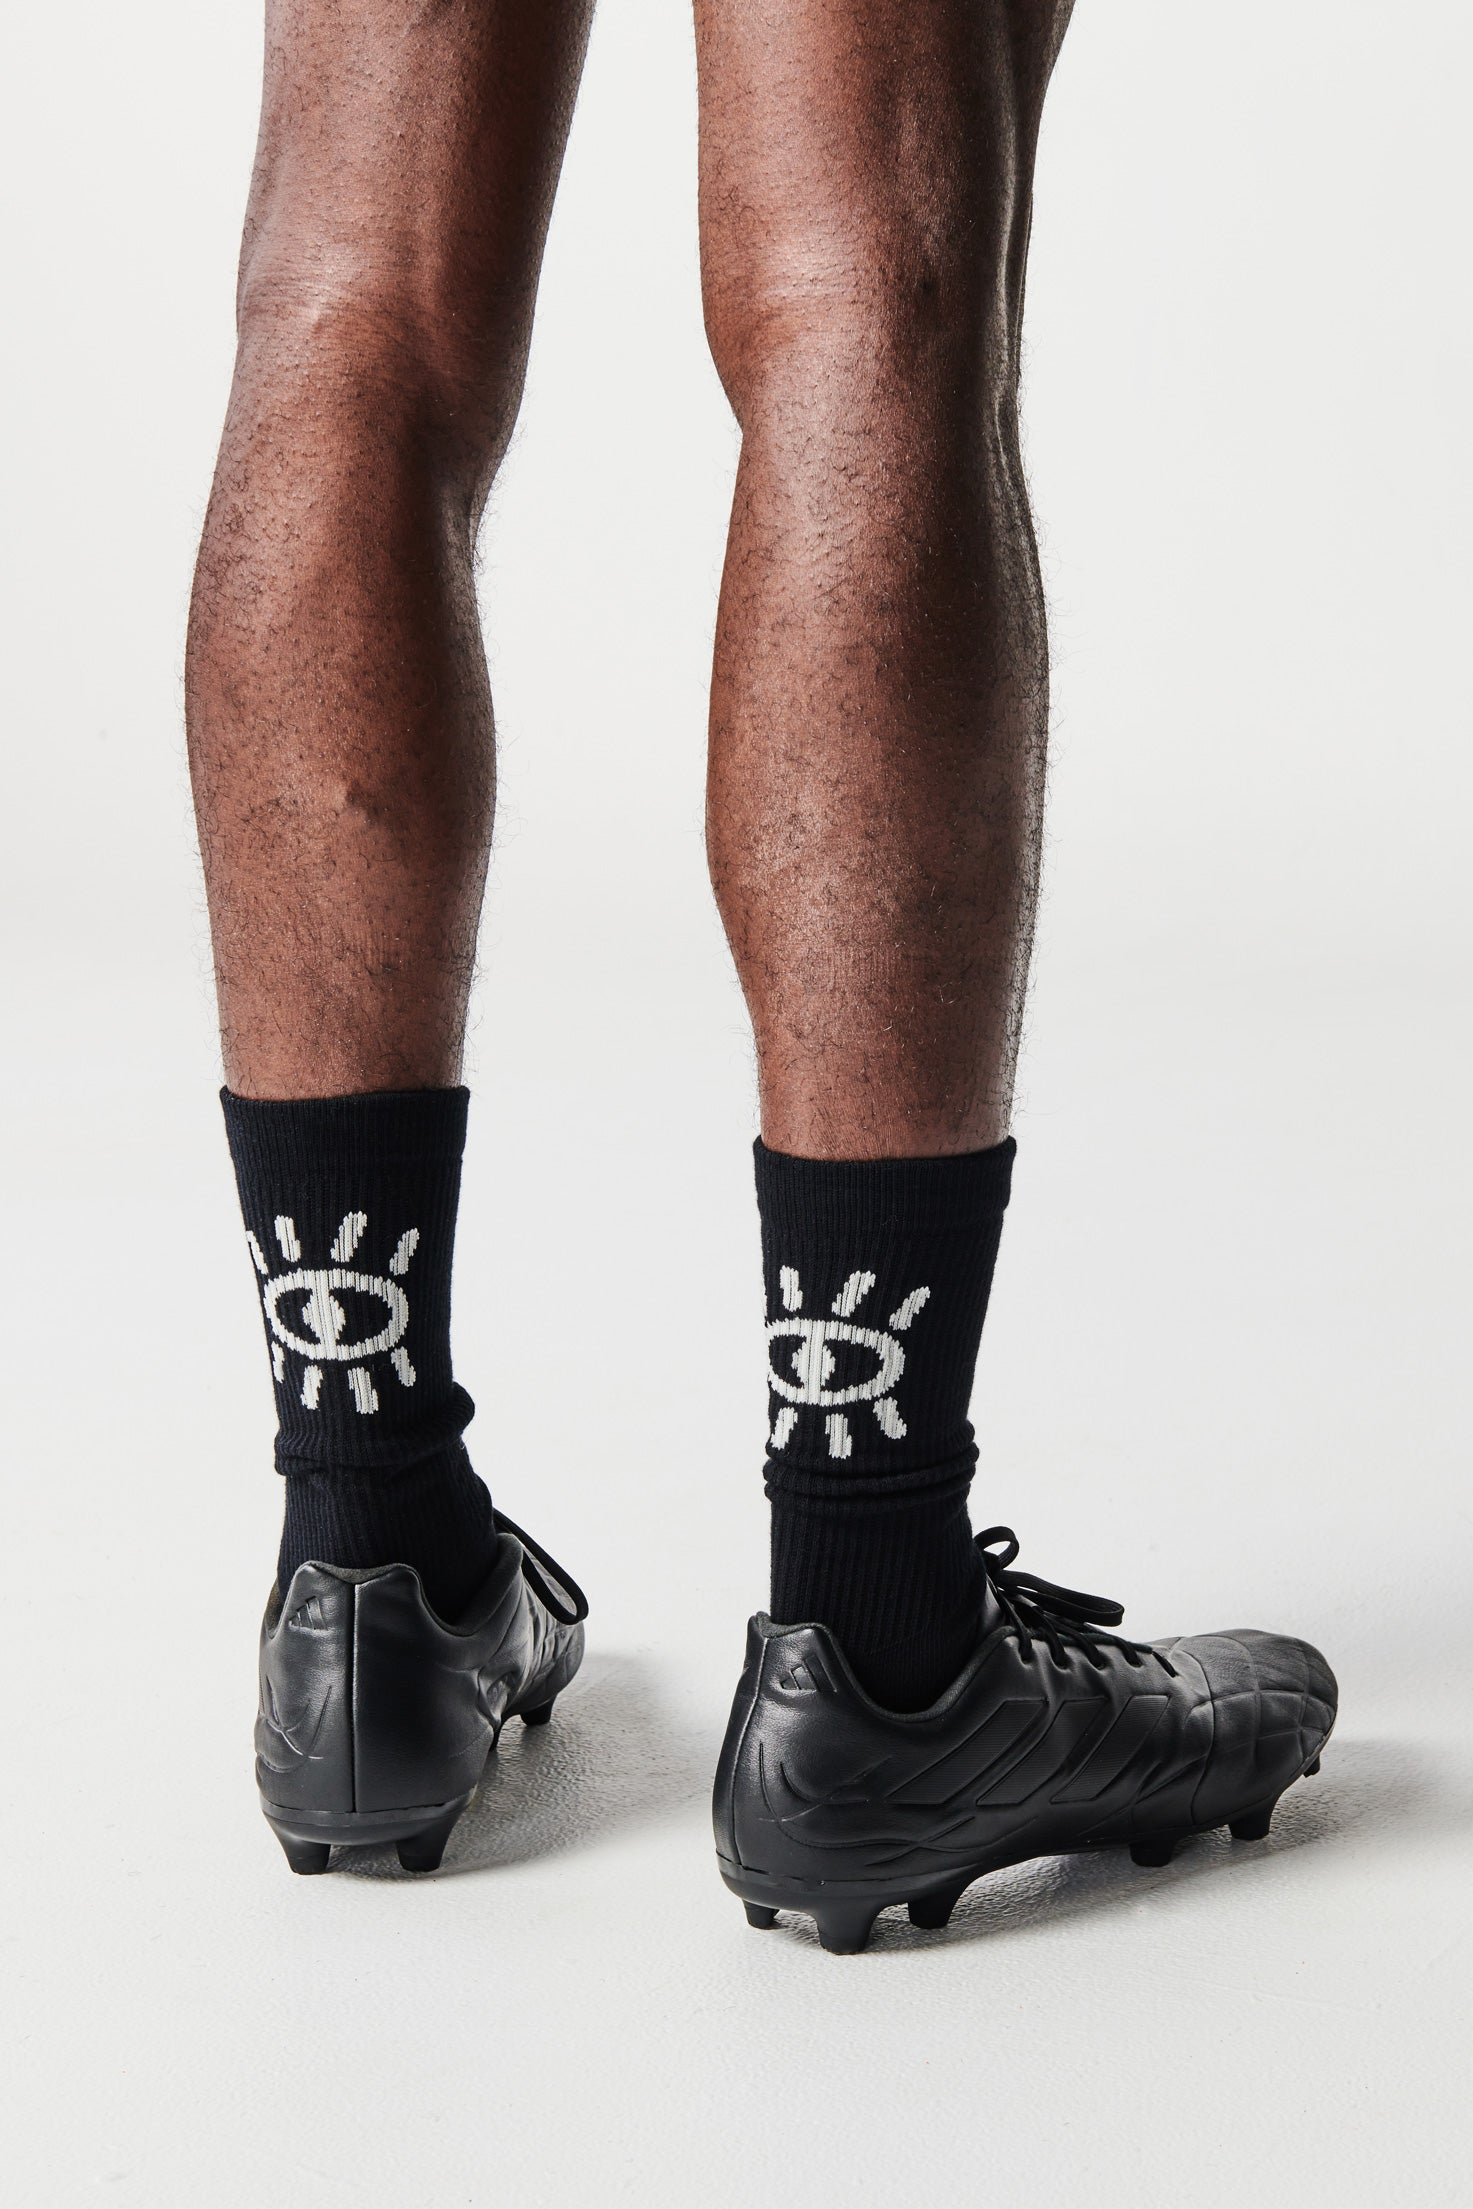 Football Sleeves Archives - Grip Star Socks Store NZ